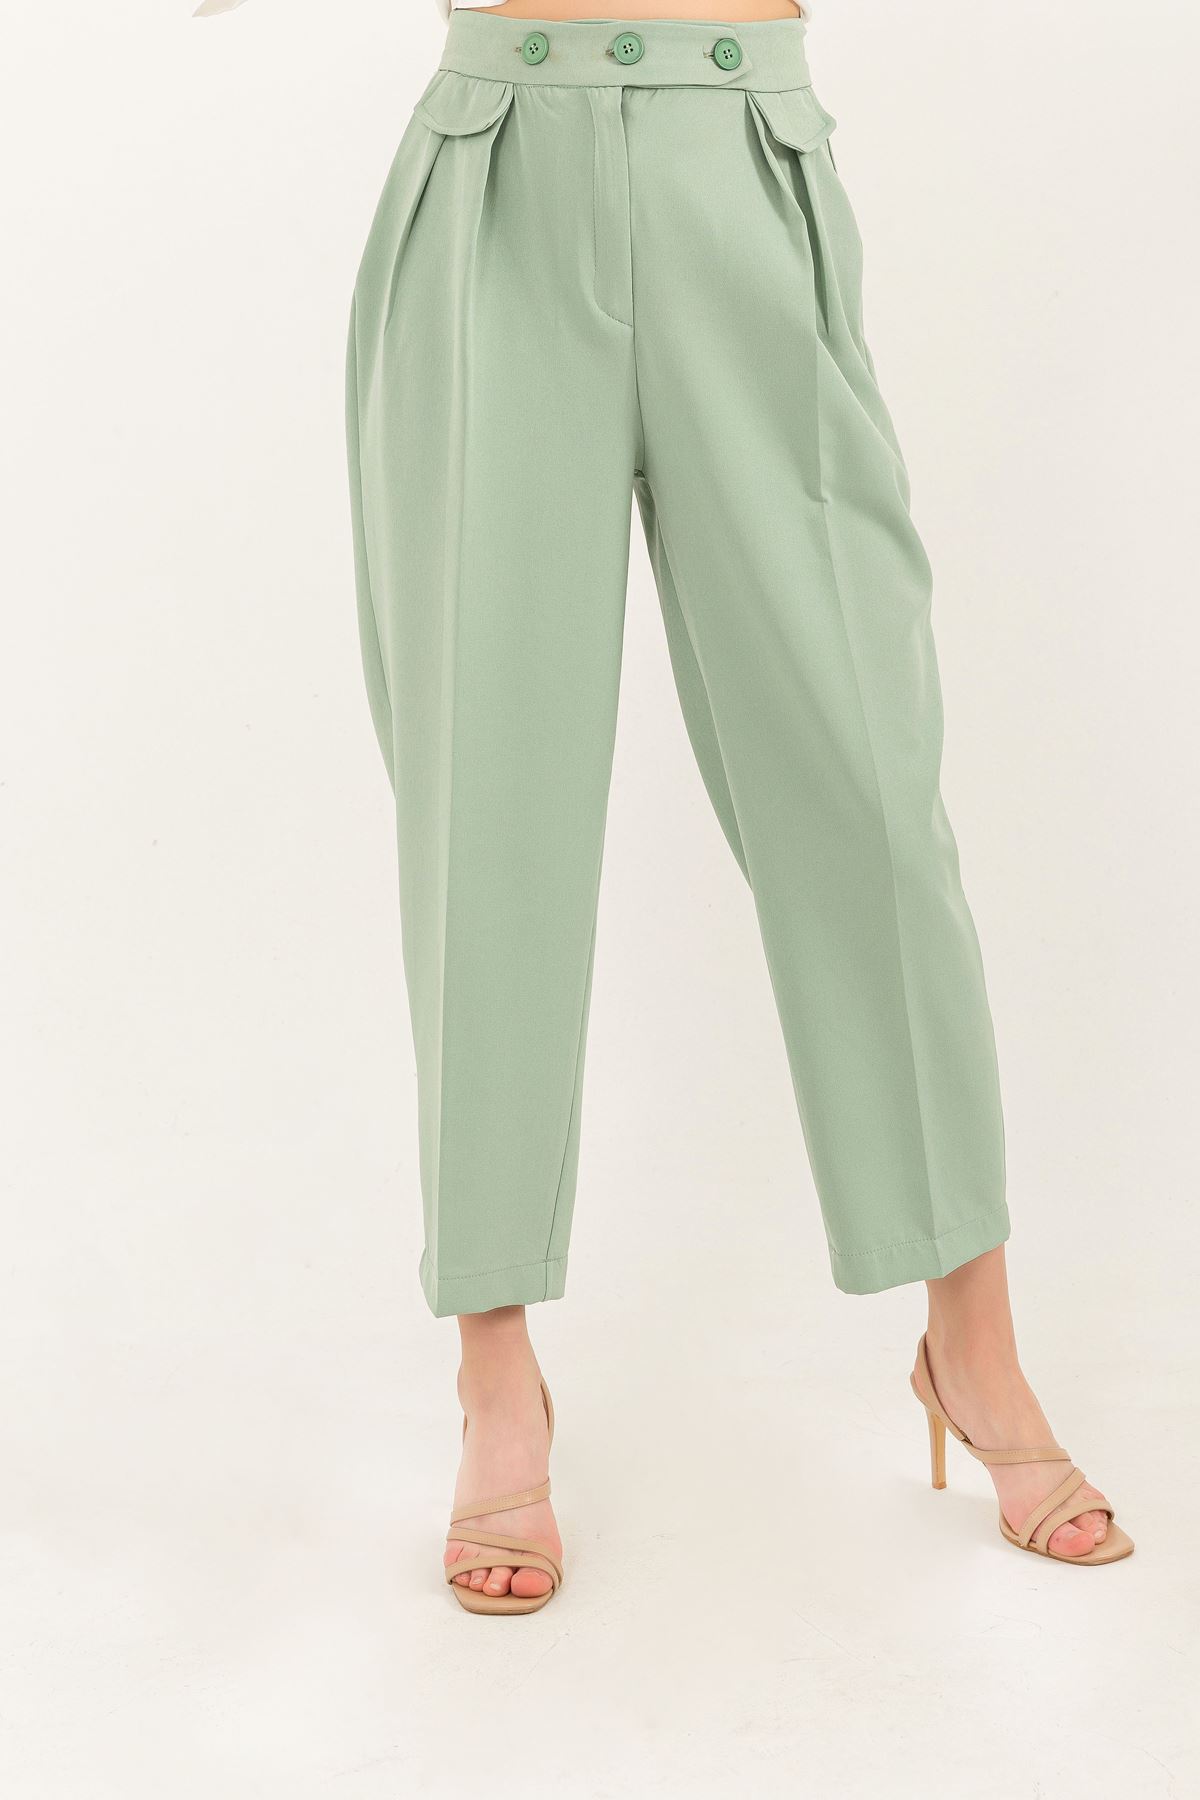 Atlas Fabric Ankle Length Carrot Style Women Trouser-Mint